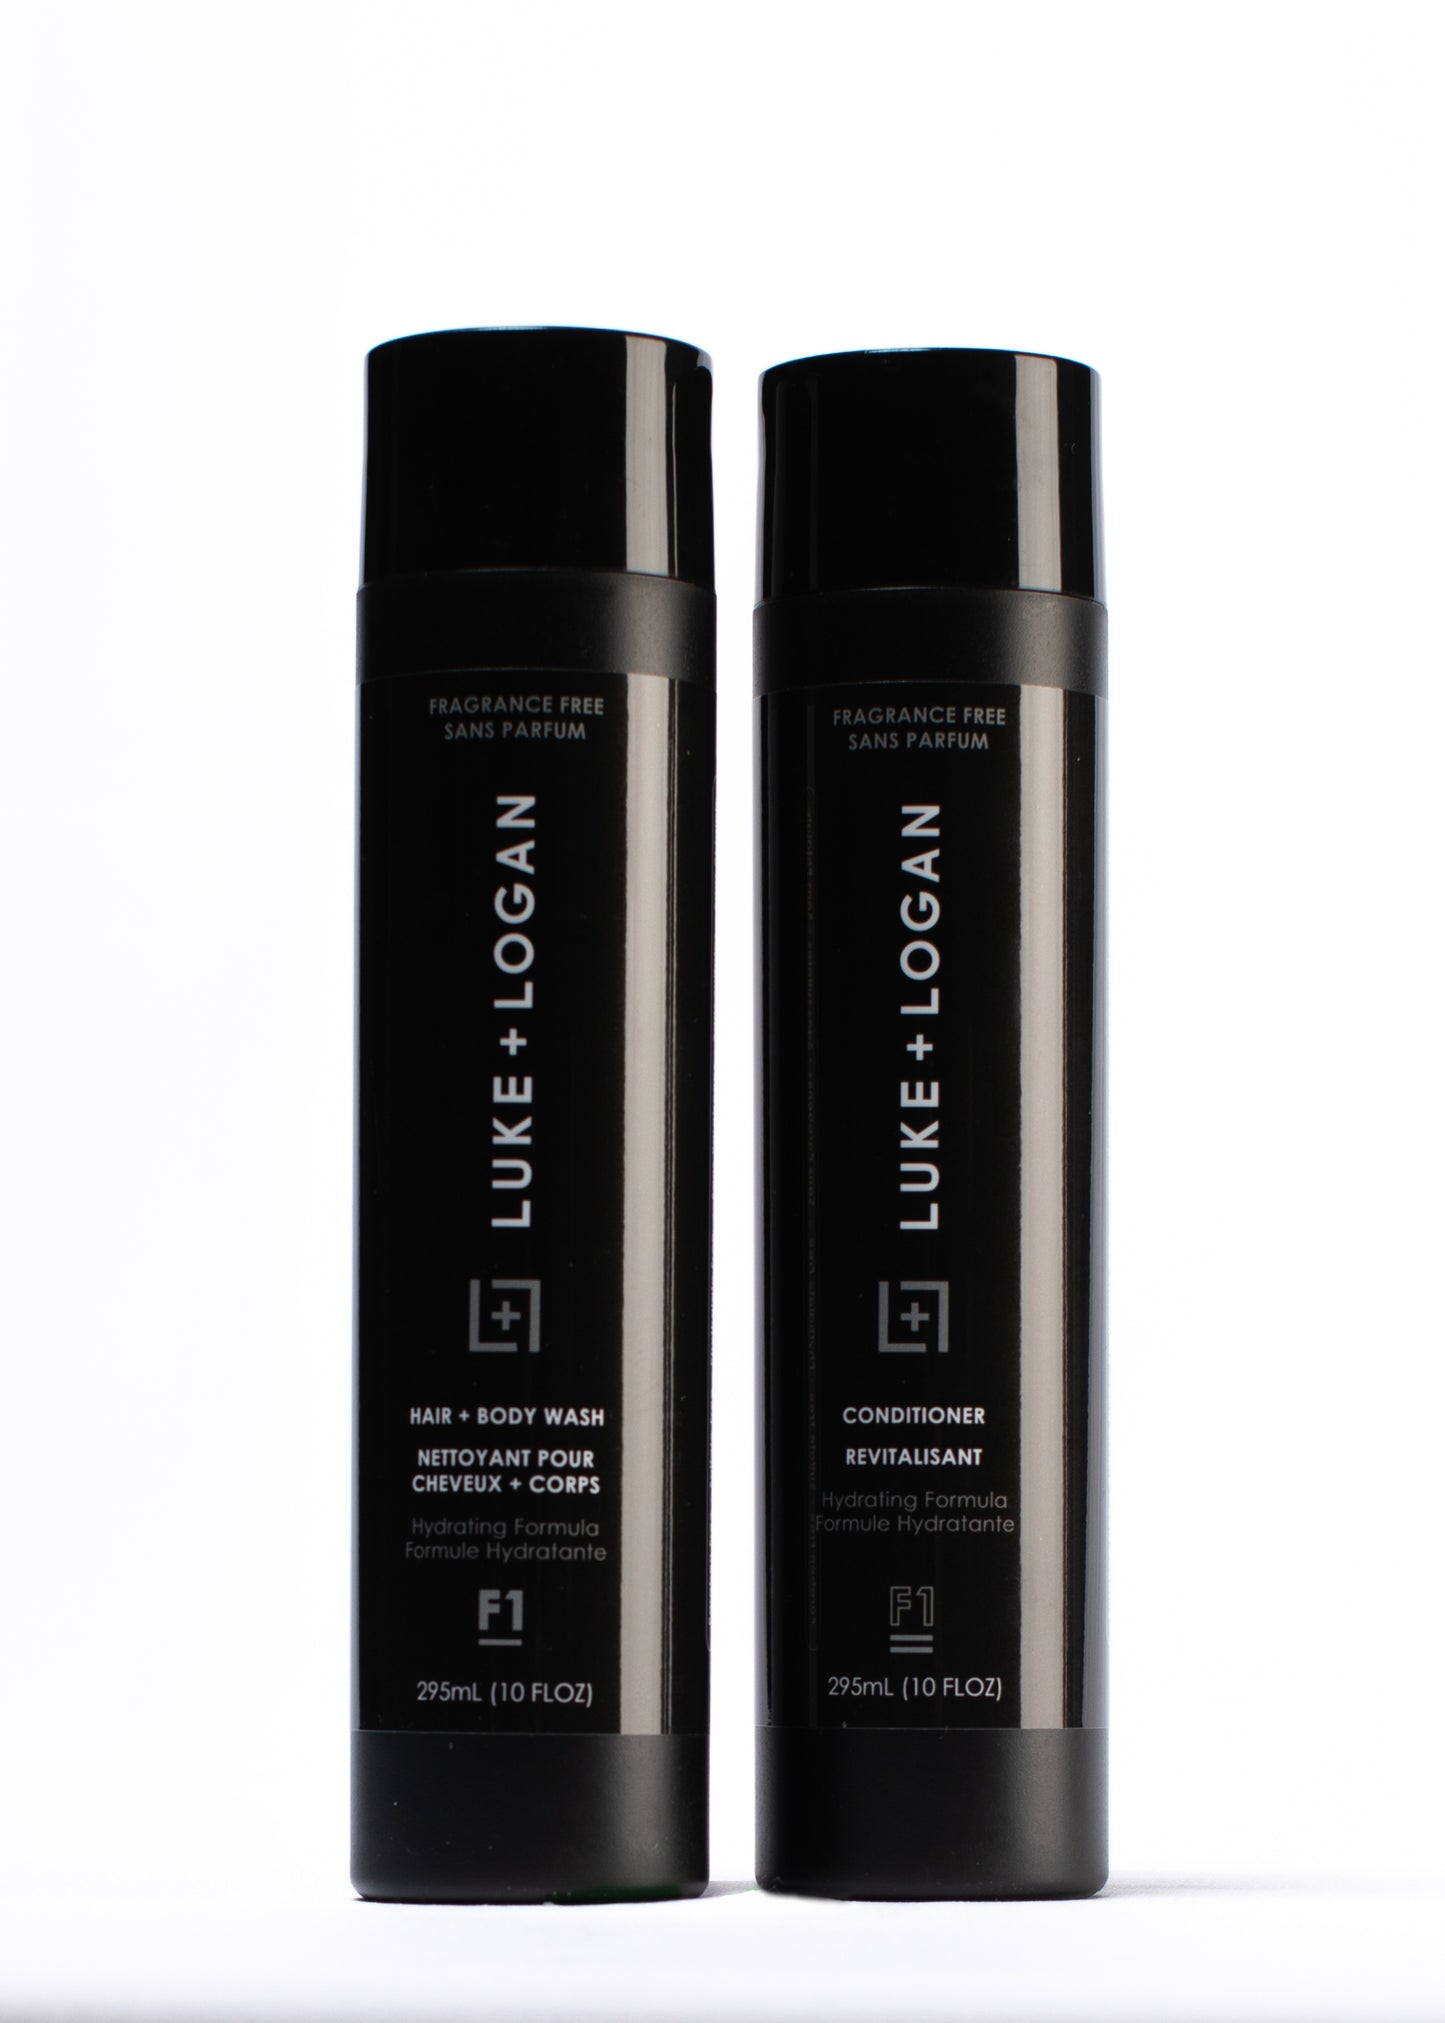 Luke+Logan F1 Start Here Set - Save 25% on Fragrance Free Hair + Body Wash & Conditioner